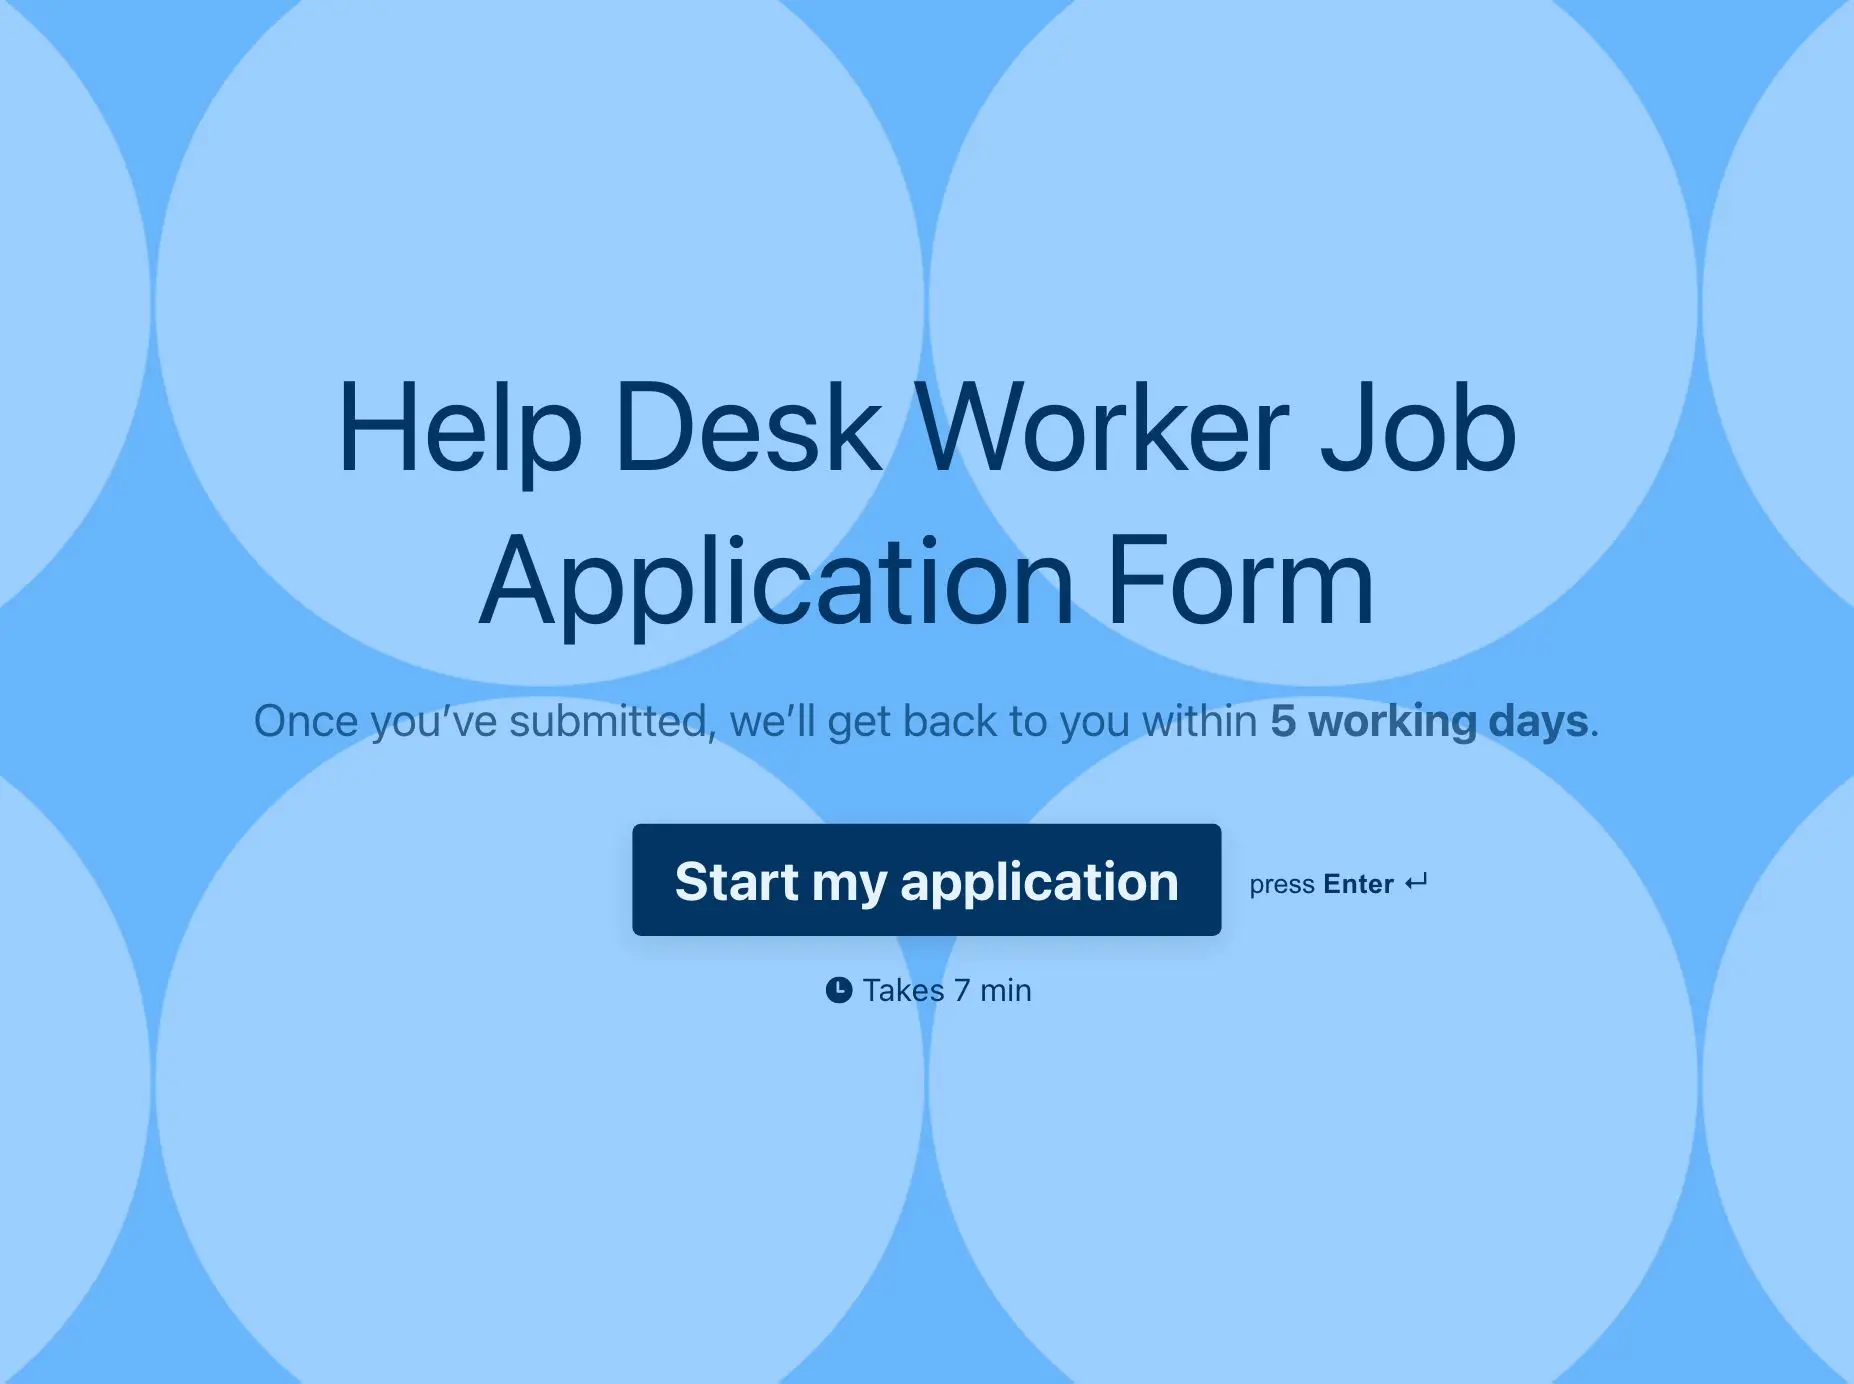 Help Desk Worker Job Application Form Template Hero